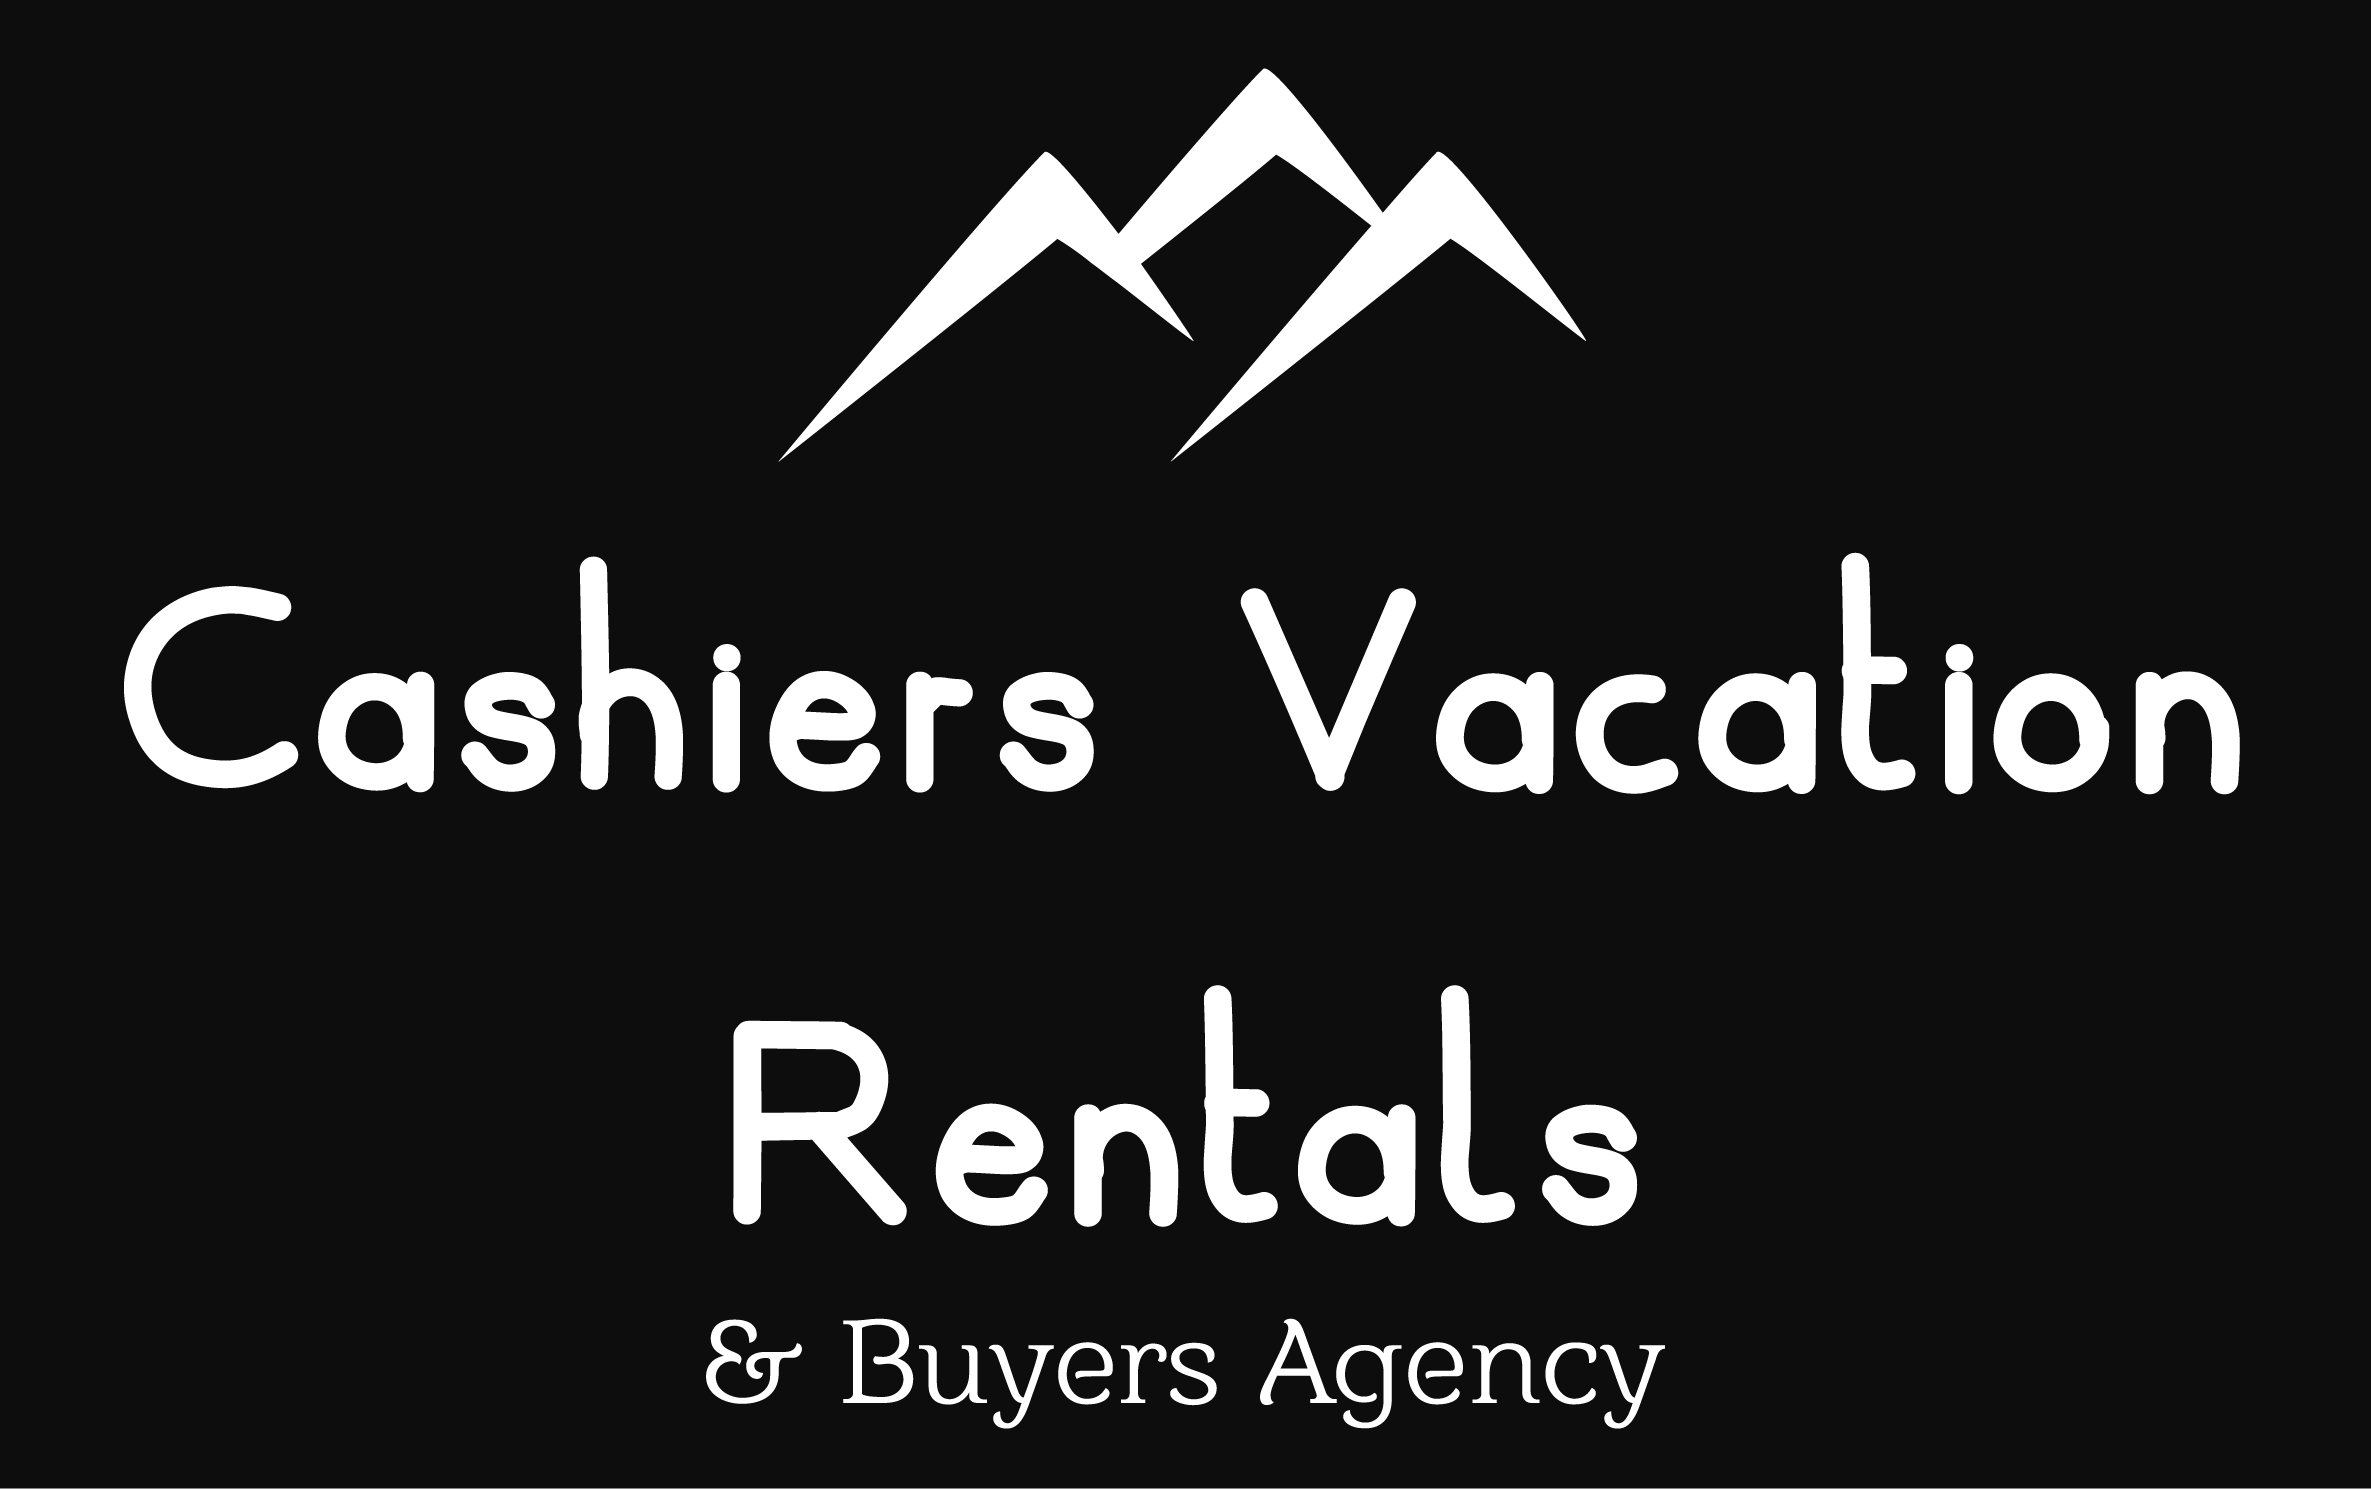 Cashiers Vacation Rentals brand logo